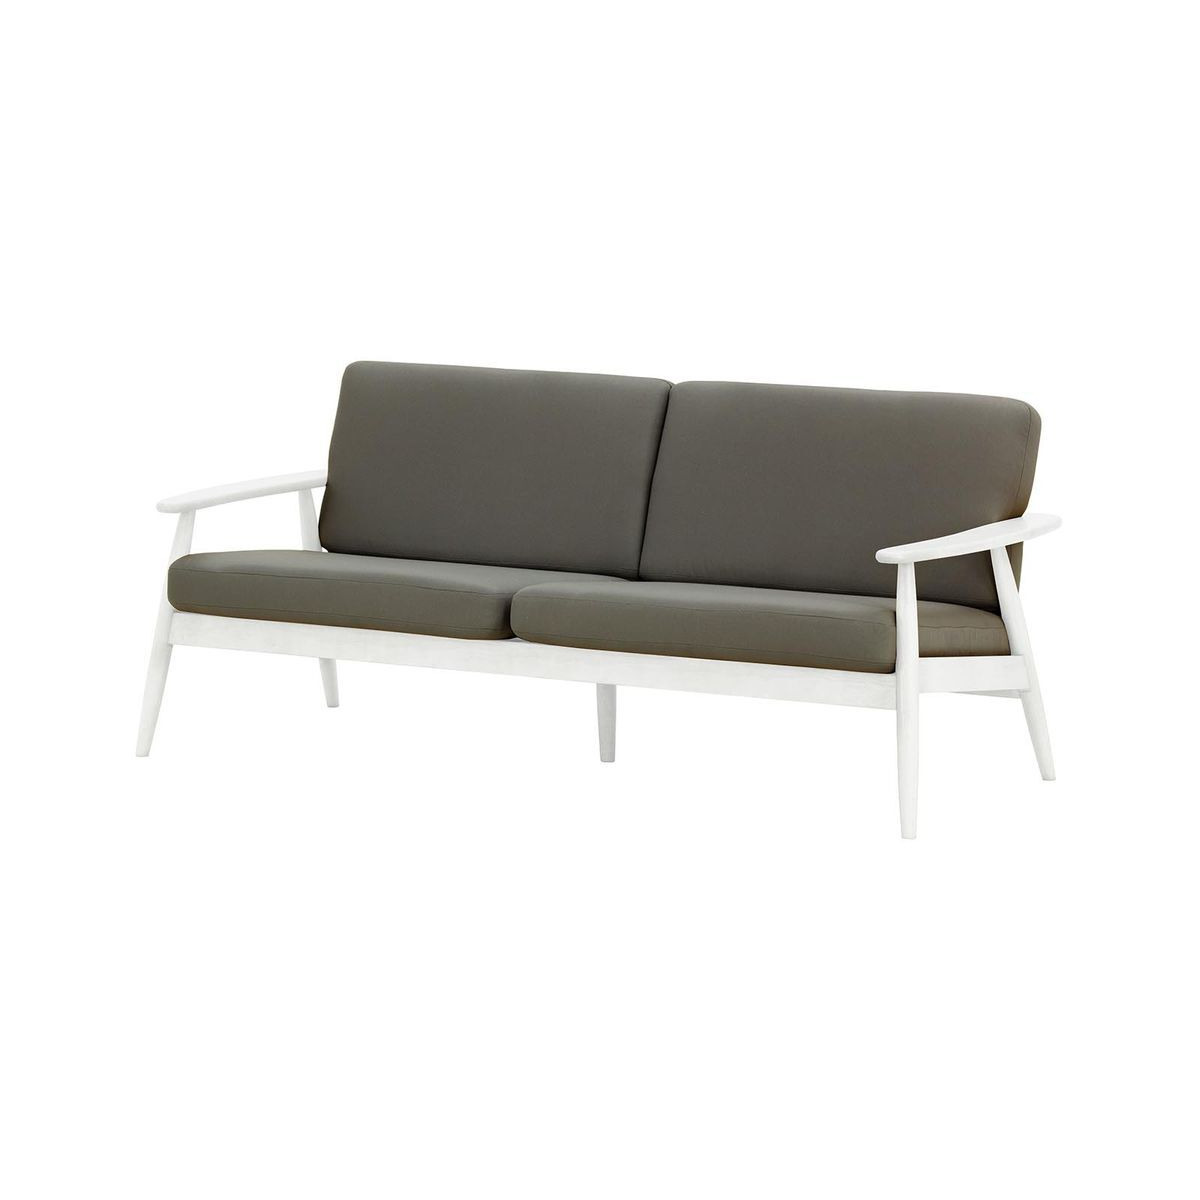 Demure Aqua 3 Seater Garden Sofa, dark grey, Leg colour: 8035 white - image 1